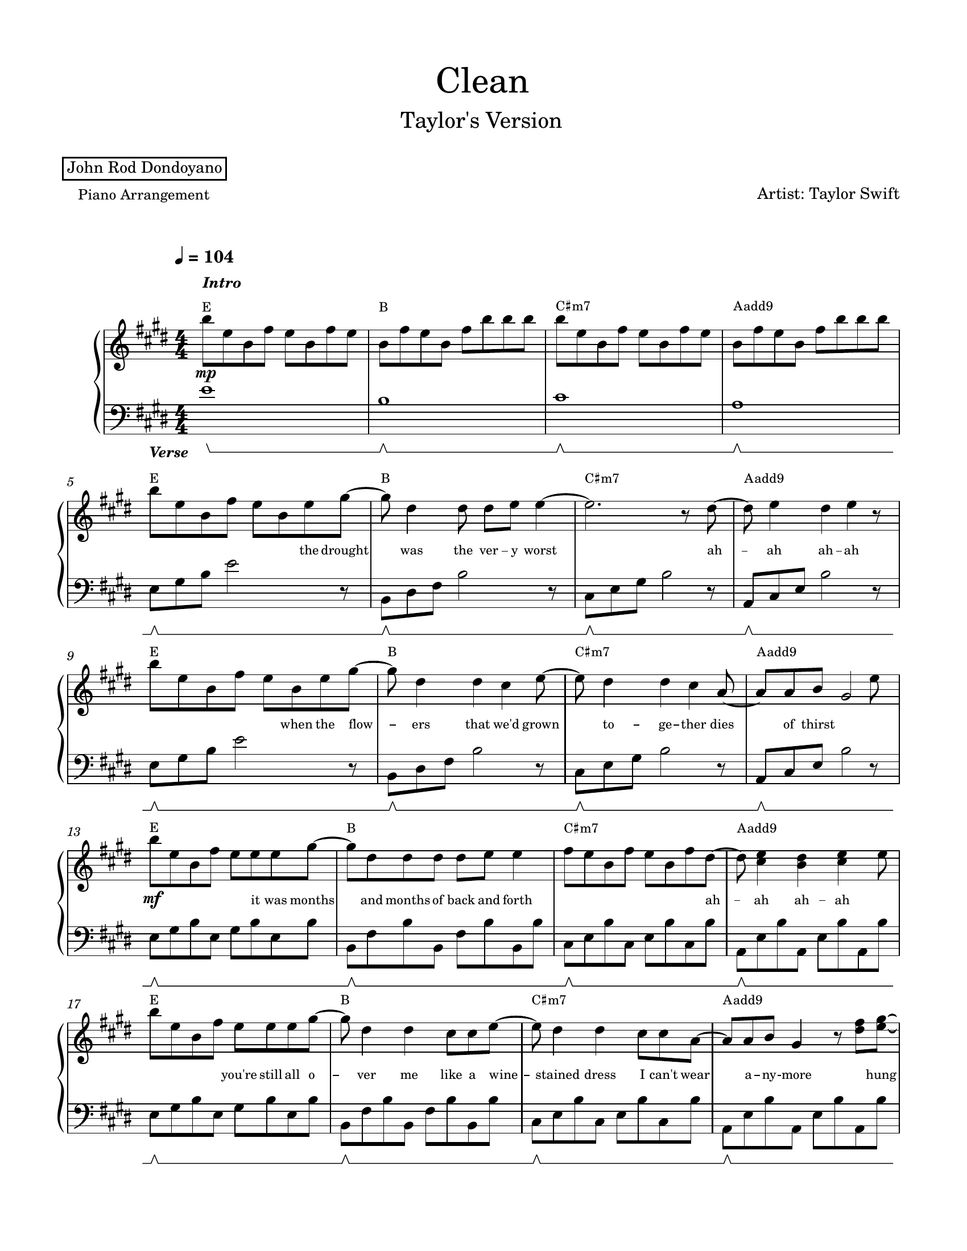 Taylor Swift - Clean (Taylor's Version)(PIANO SHEET) by John Rod Dondoyano